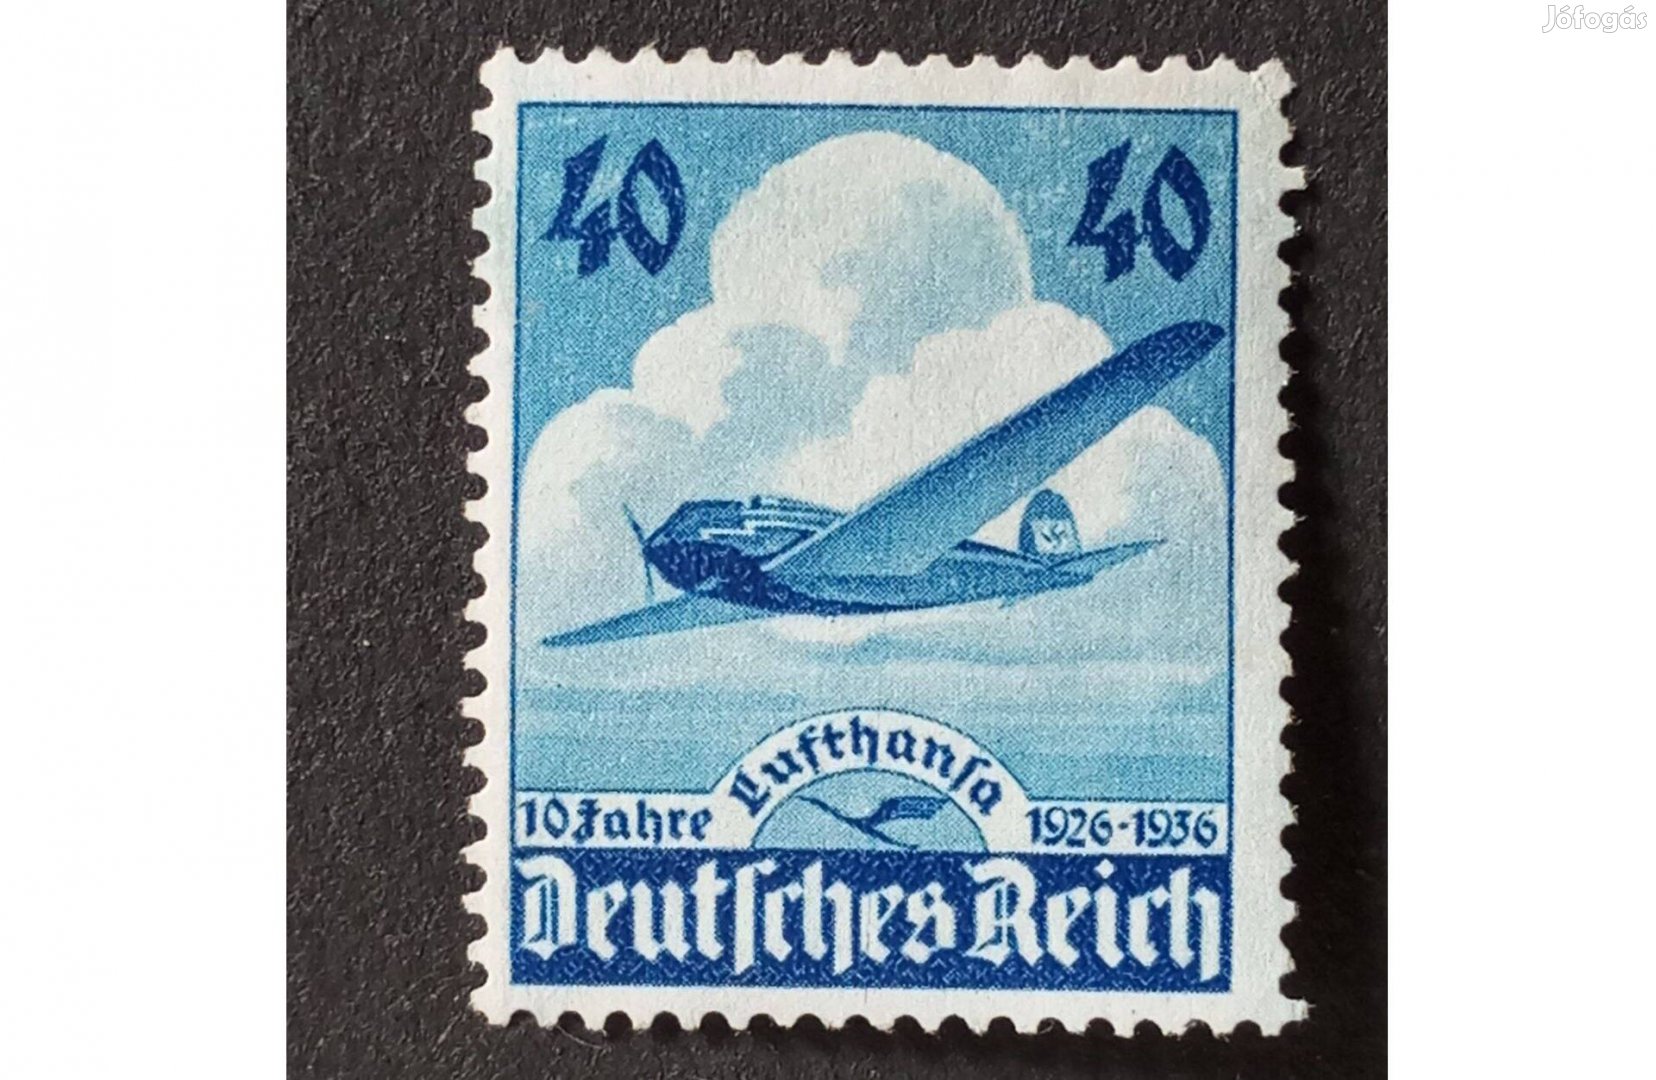 Deutsches Reich postatiszta bélyeg 1936 A Lufthansa 10. évfordulója